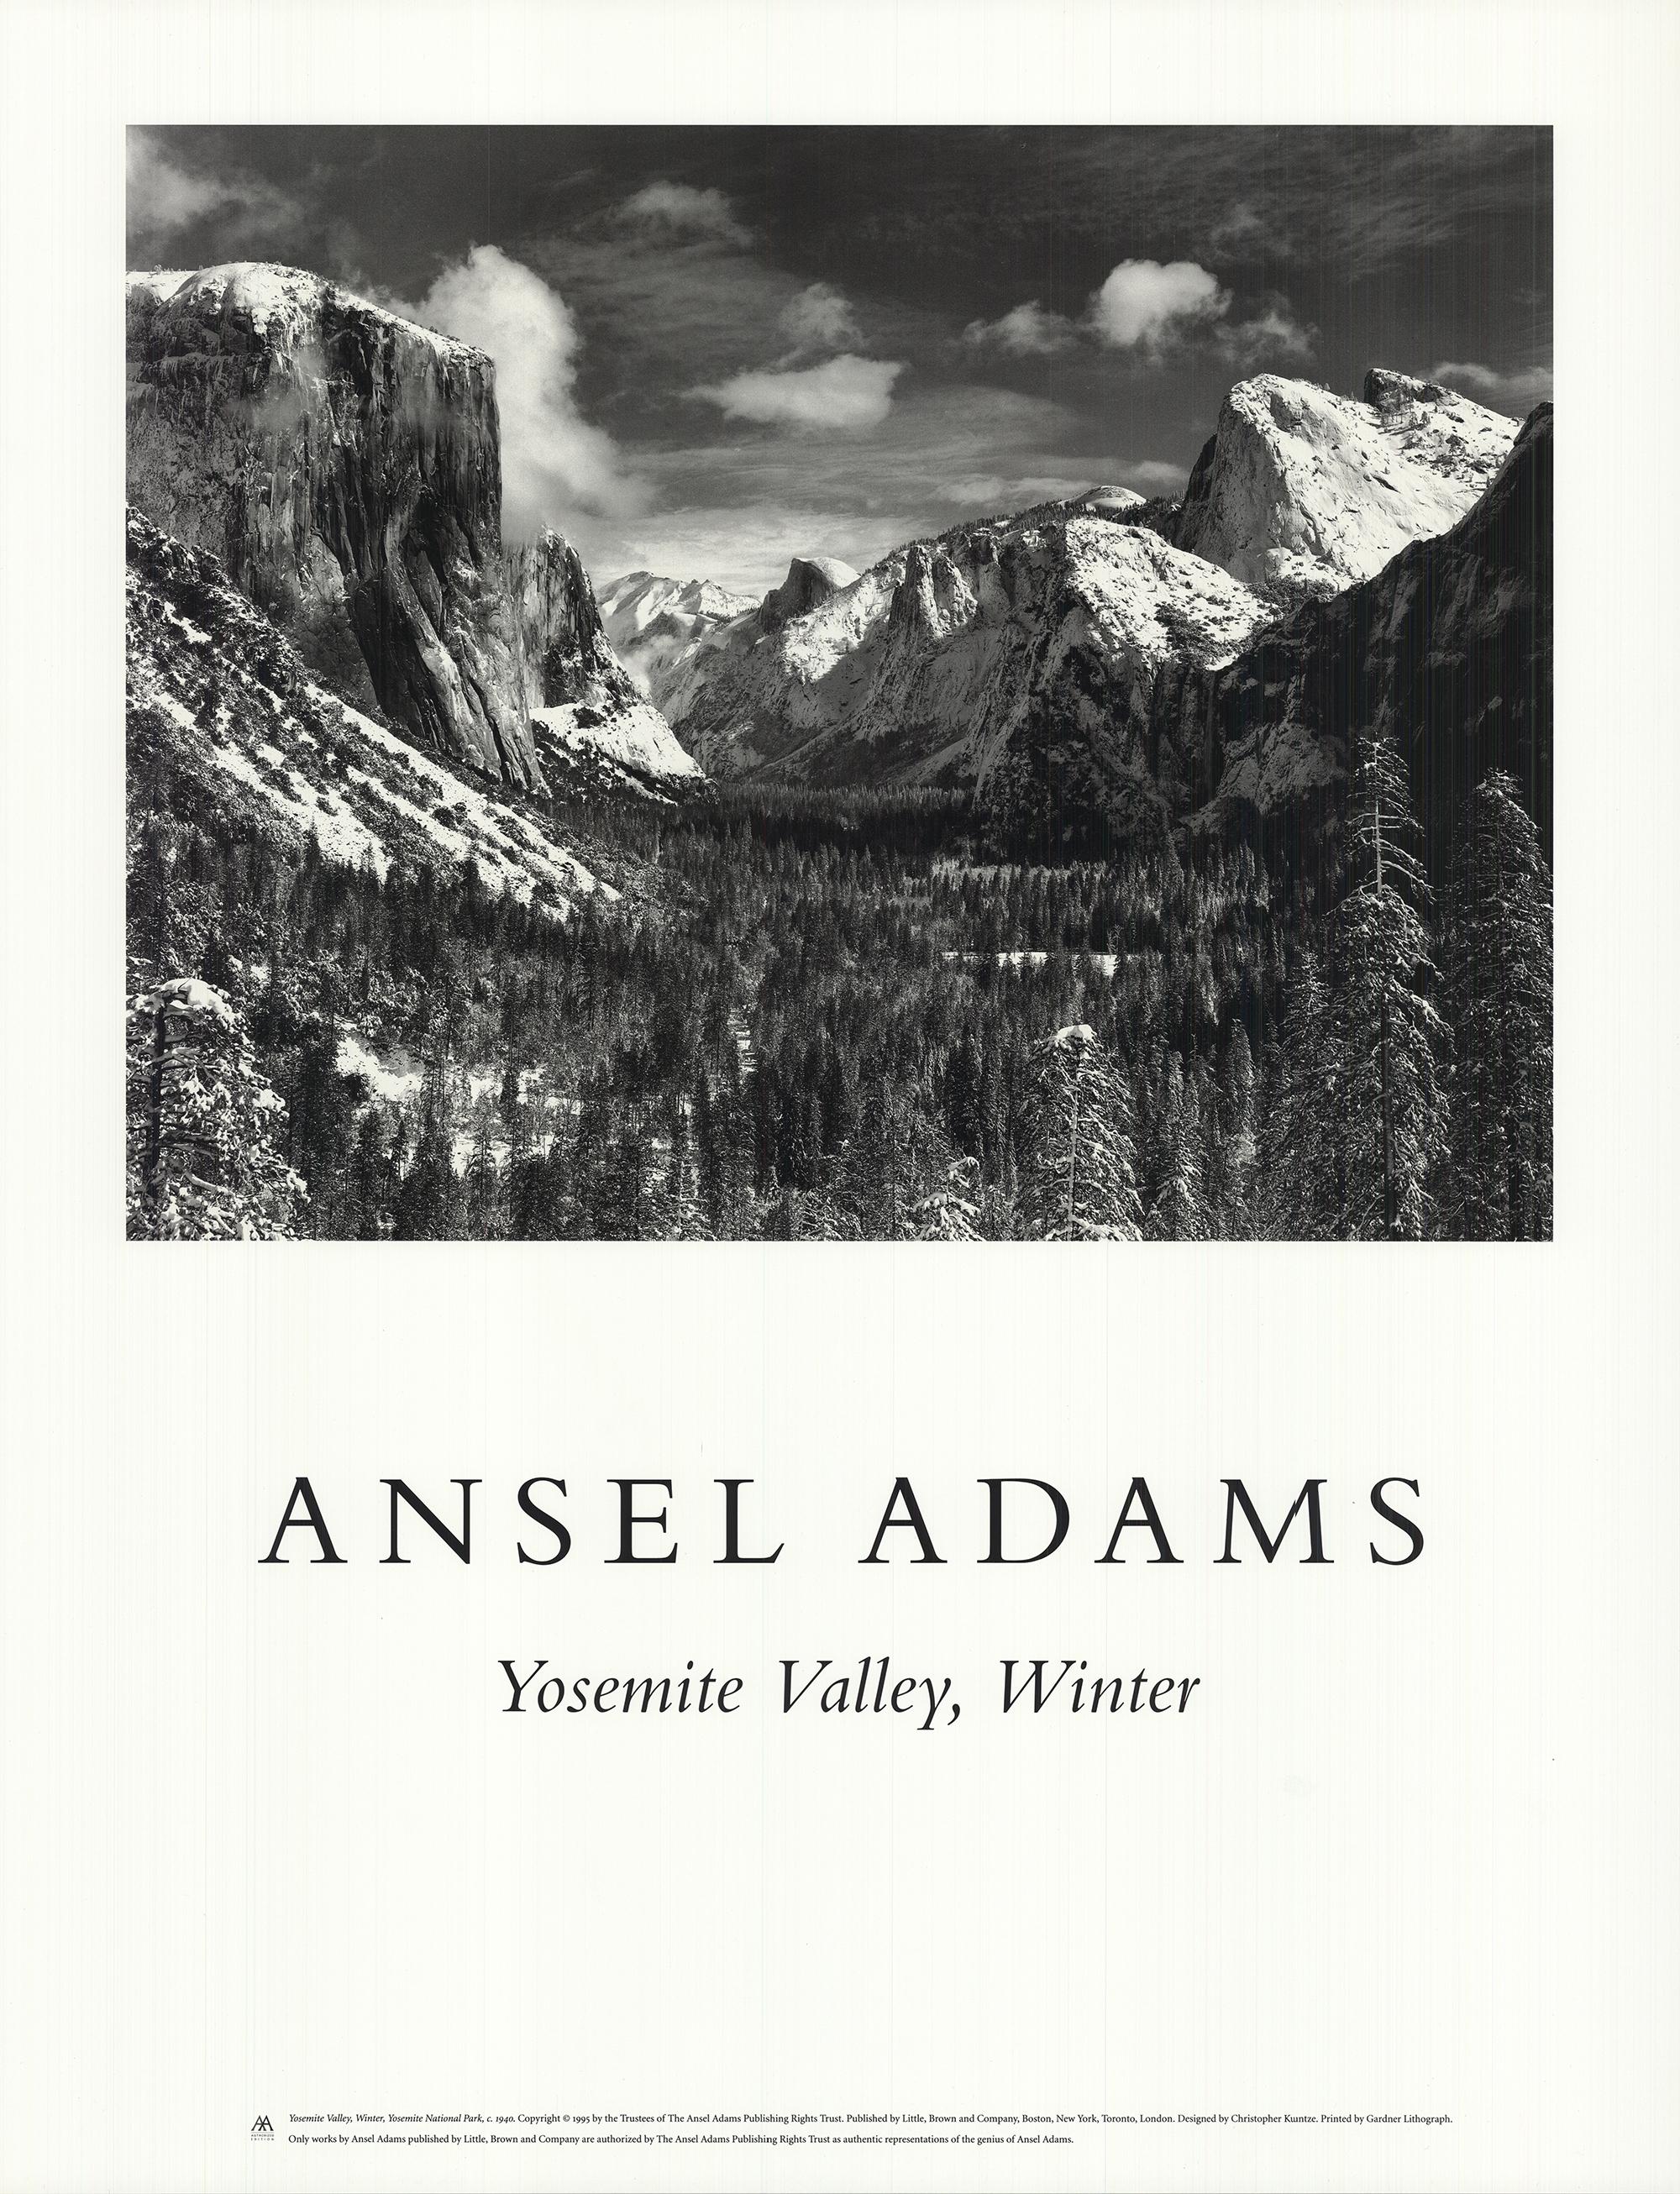 ANSEL ADAMS Yosemite Valley, Winter 29.25" x 22.5" Poster 1995 - Print by Ansel Adams